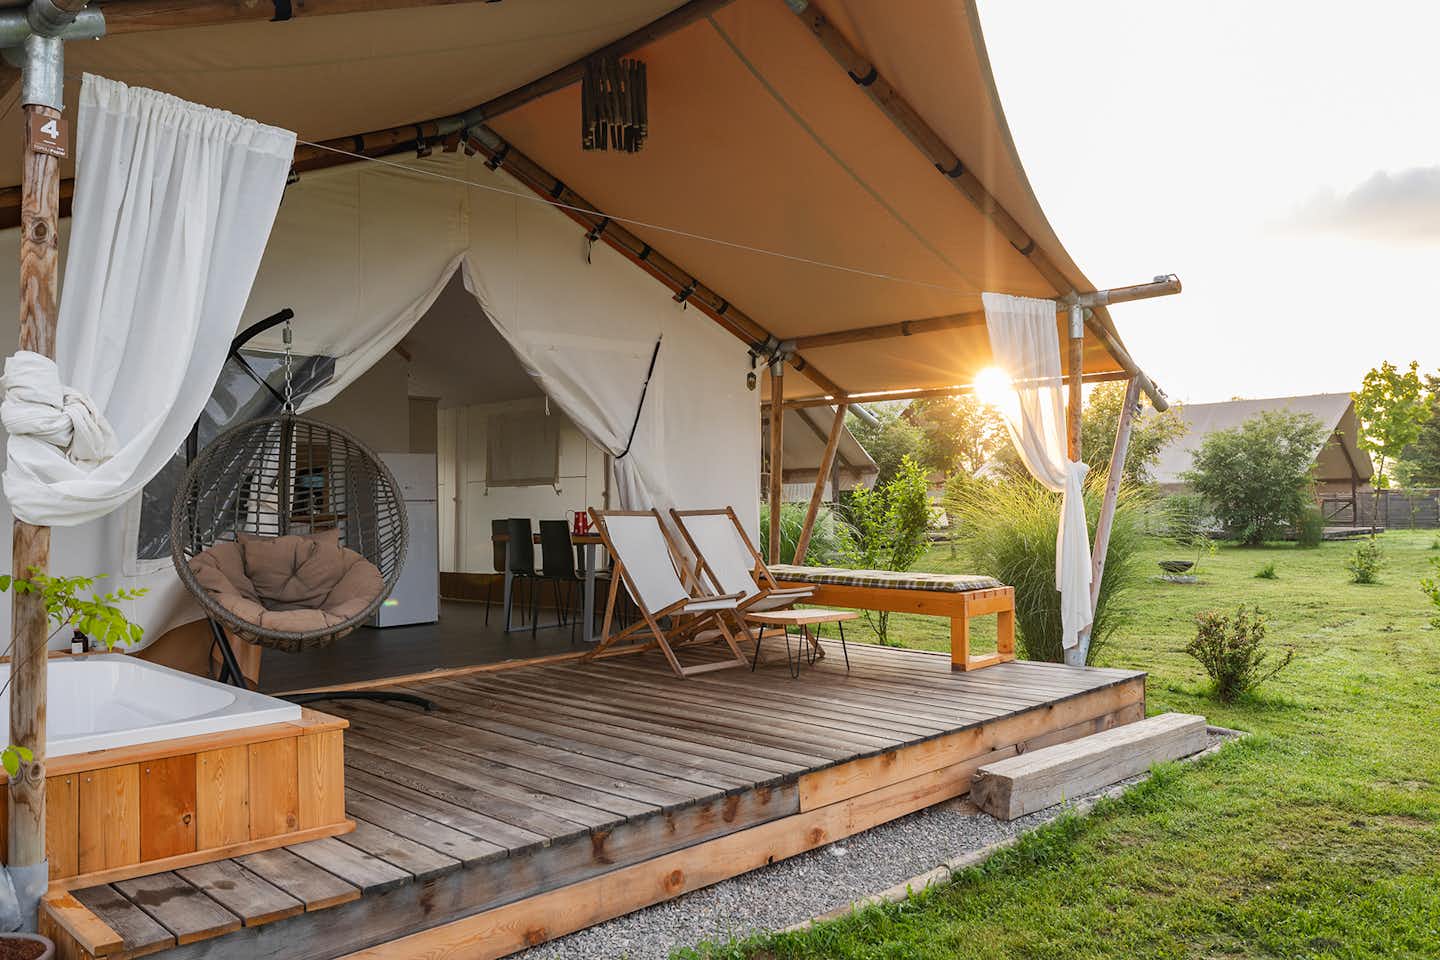 Kolpa Resort Glamping - Glamping-Zelt auf dem Campingplatz